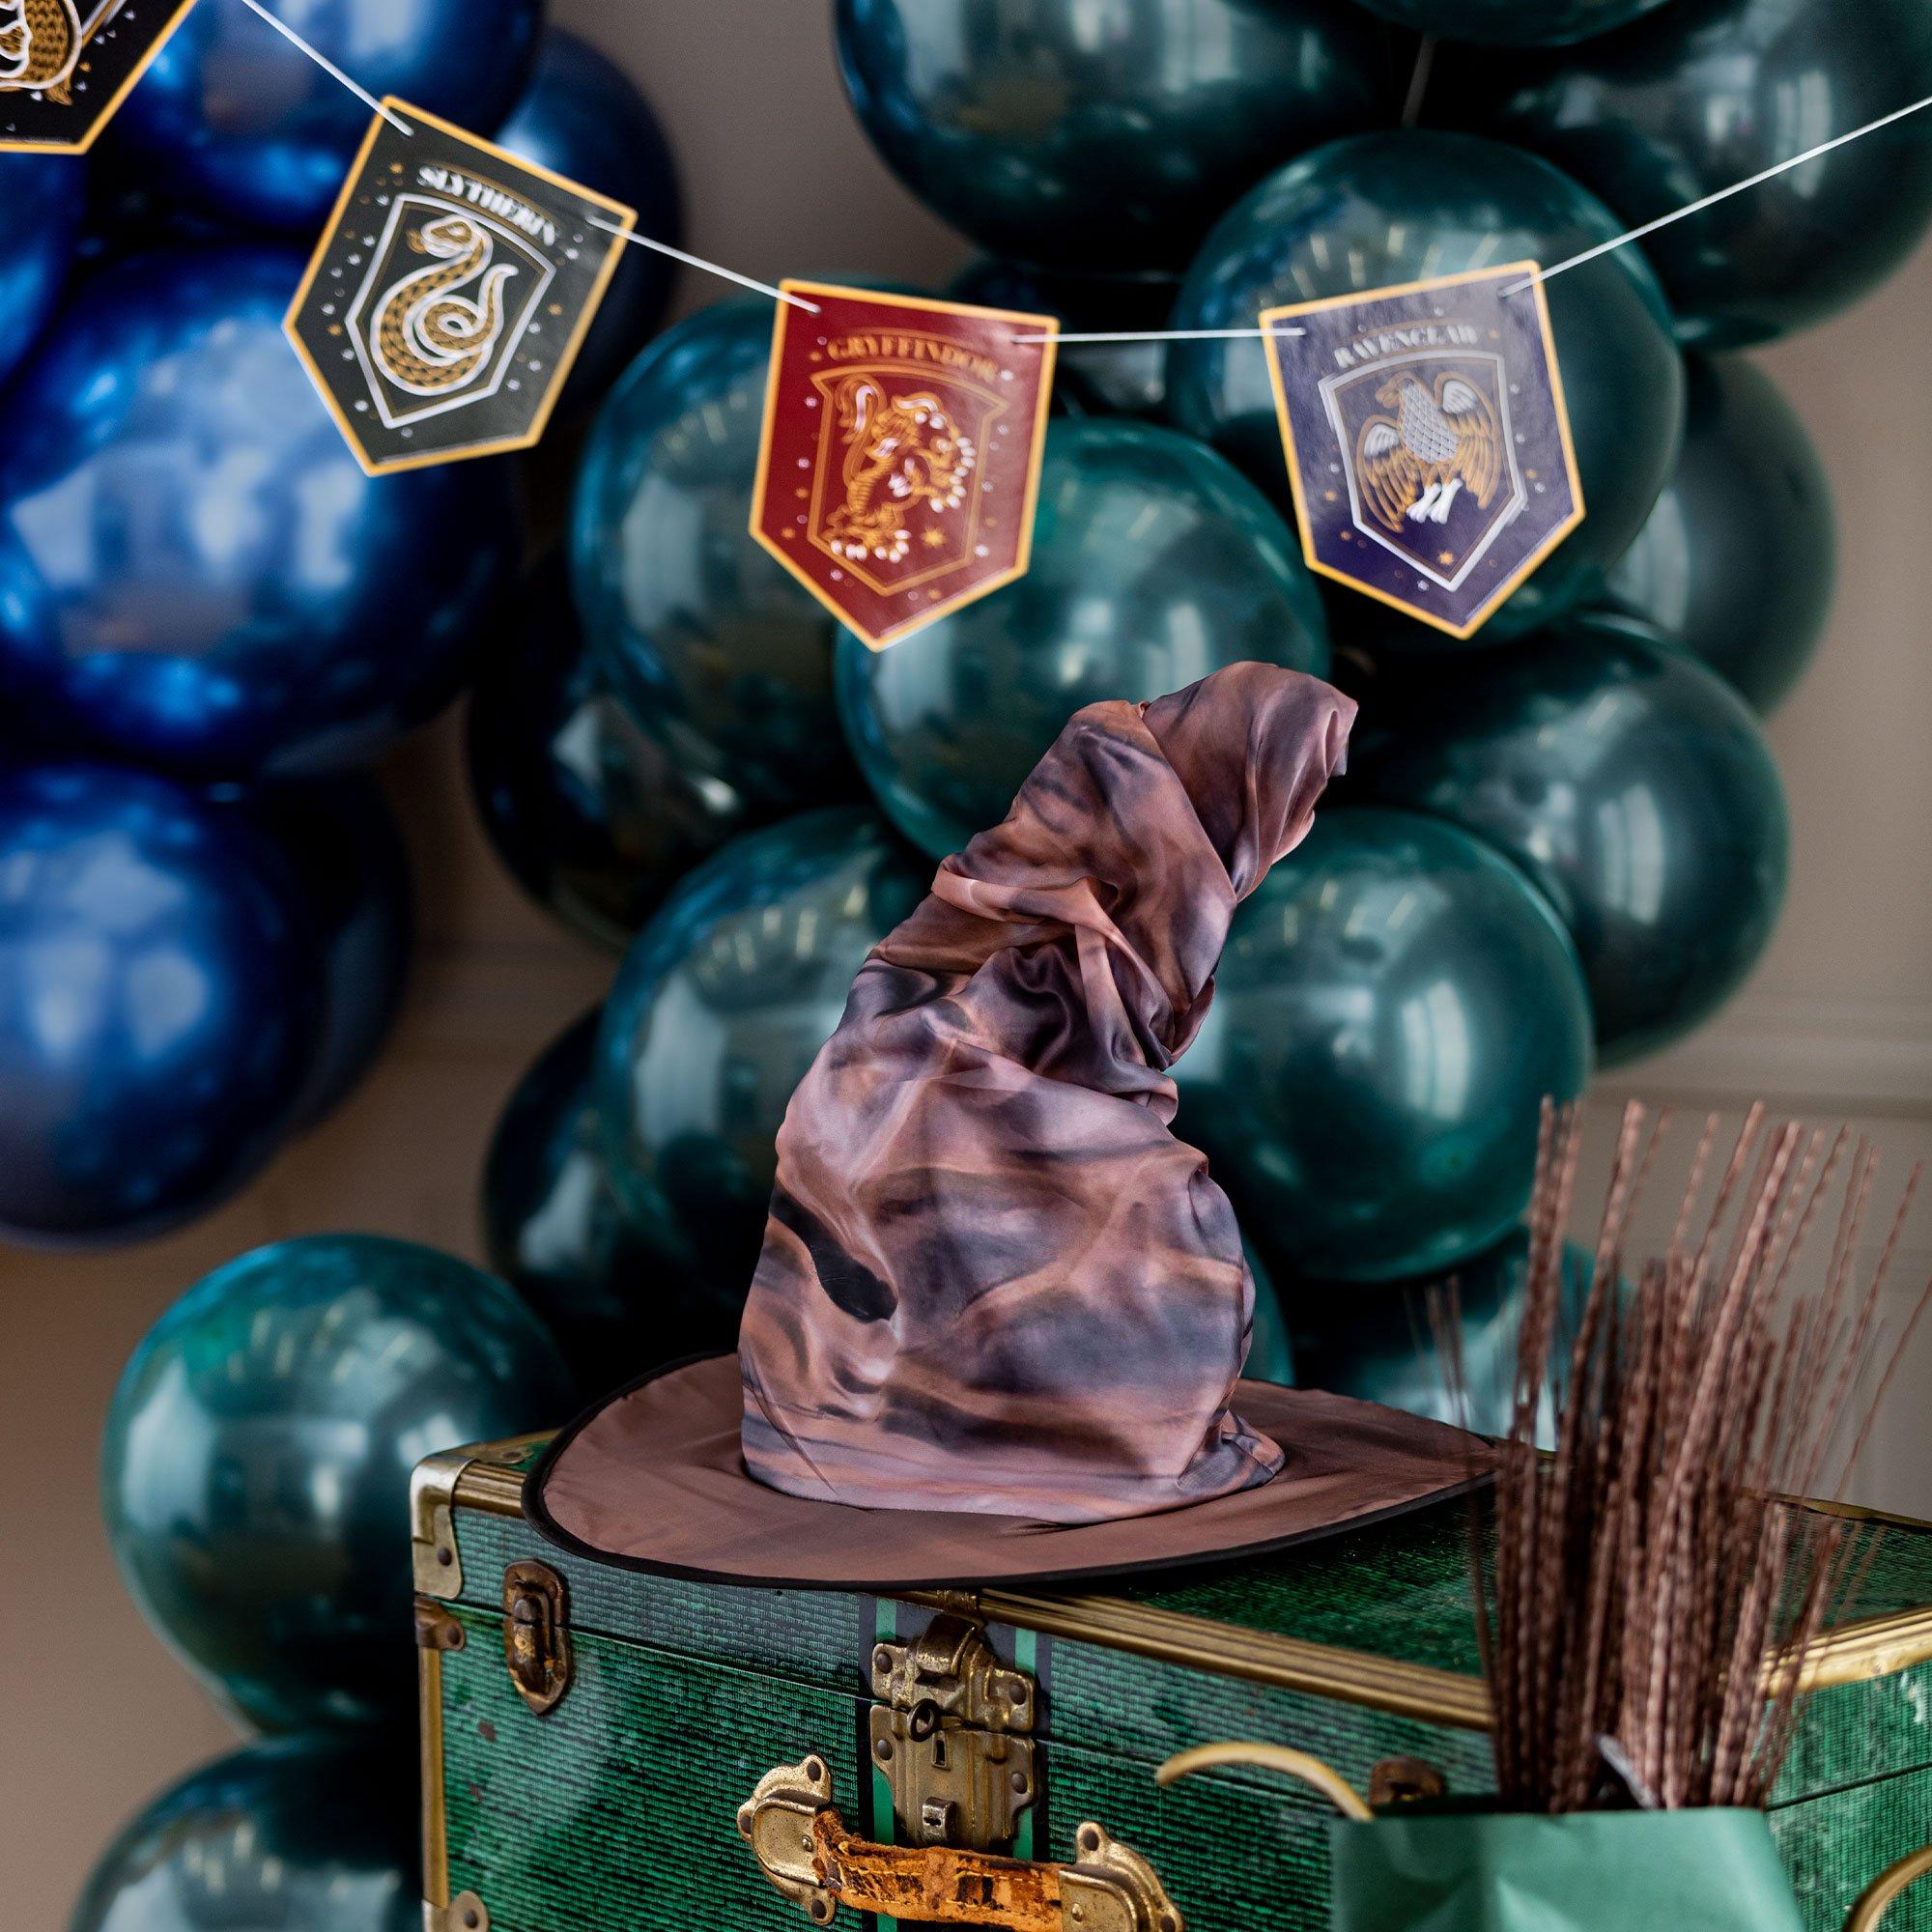 Harry Potter Birthday Decorations Kit